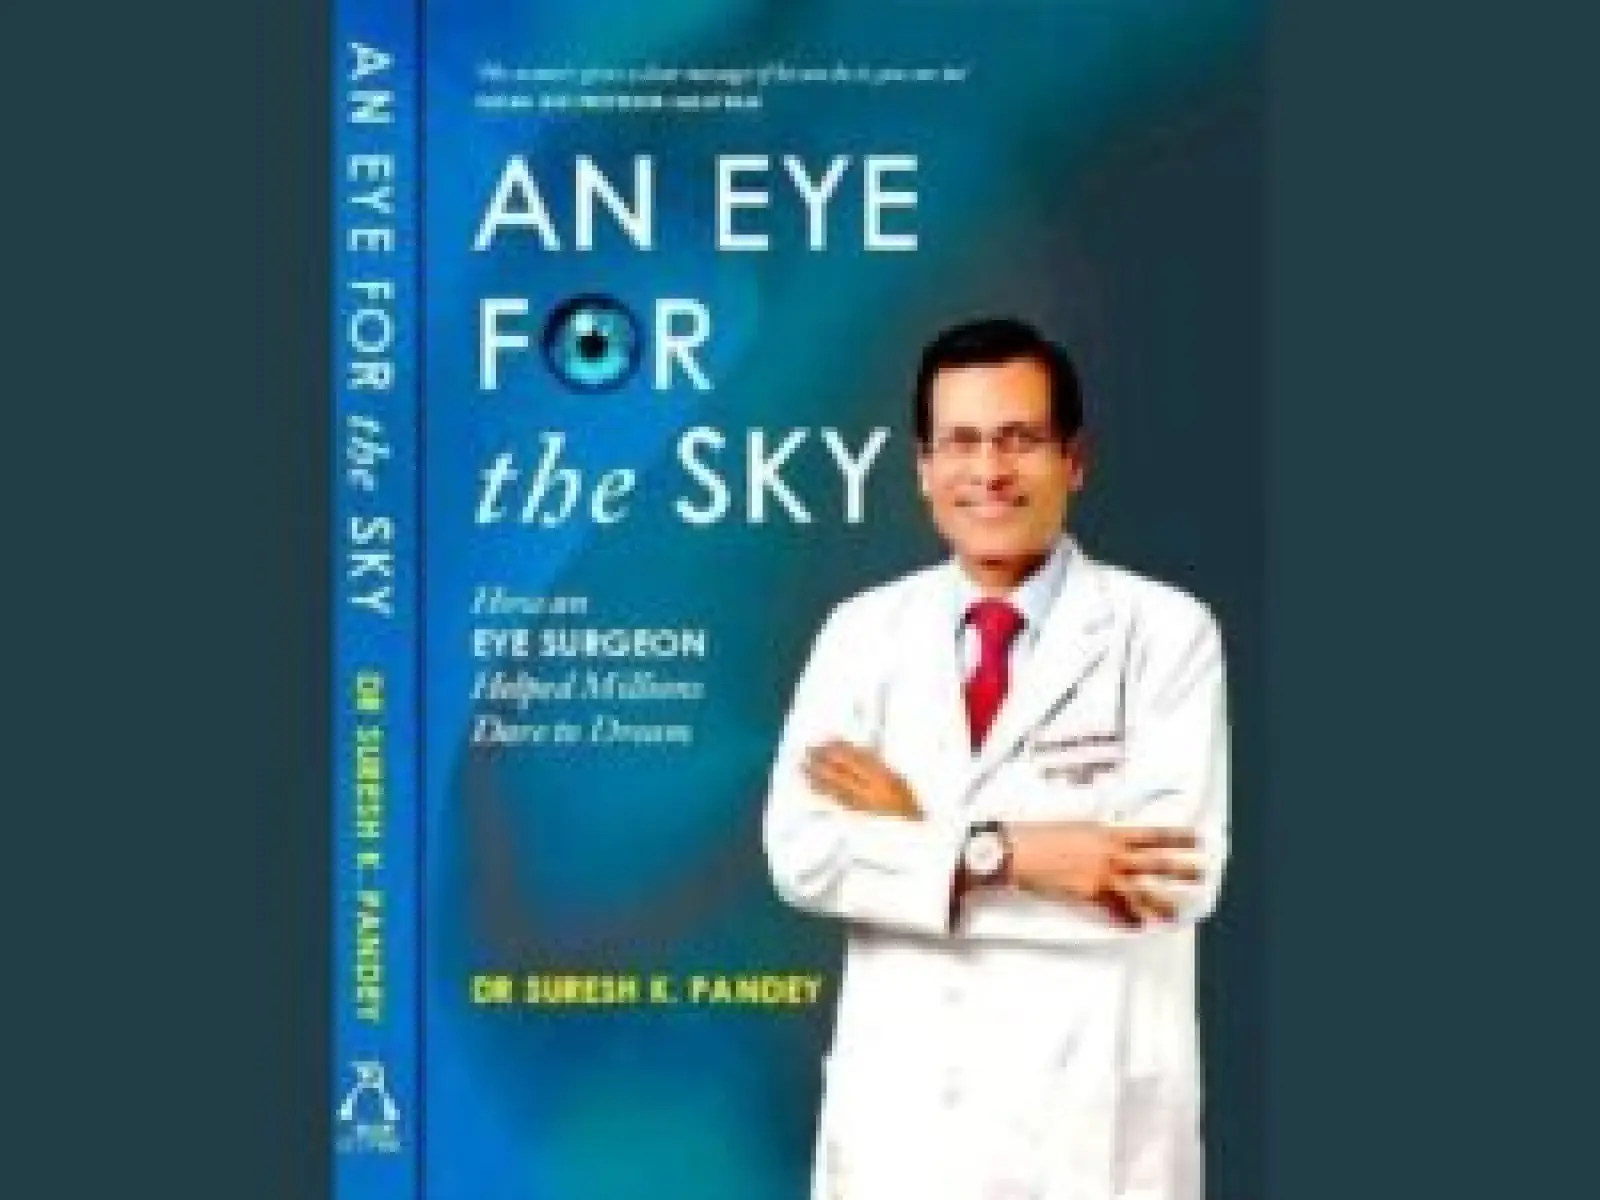 Pengiun Enterprise Announces Upcoming Memoir of Renowned Eye Surgeon Dr. Suresh K. Pandey 'An Eye for the Sky: How an Eye Surgeon Helped Millions